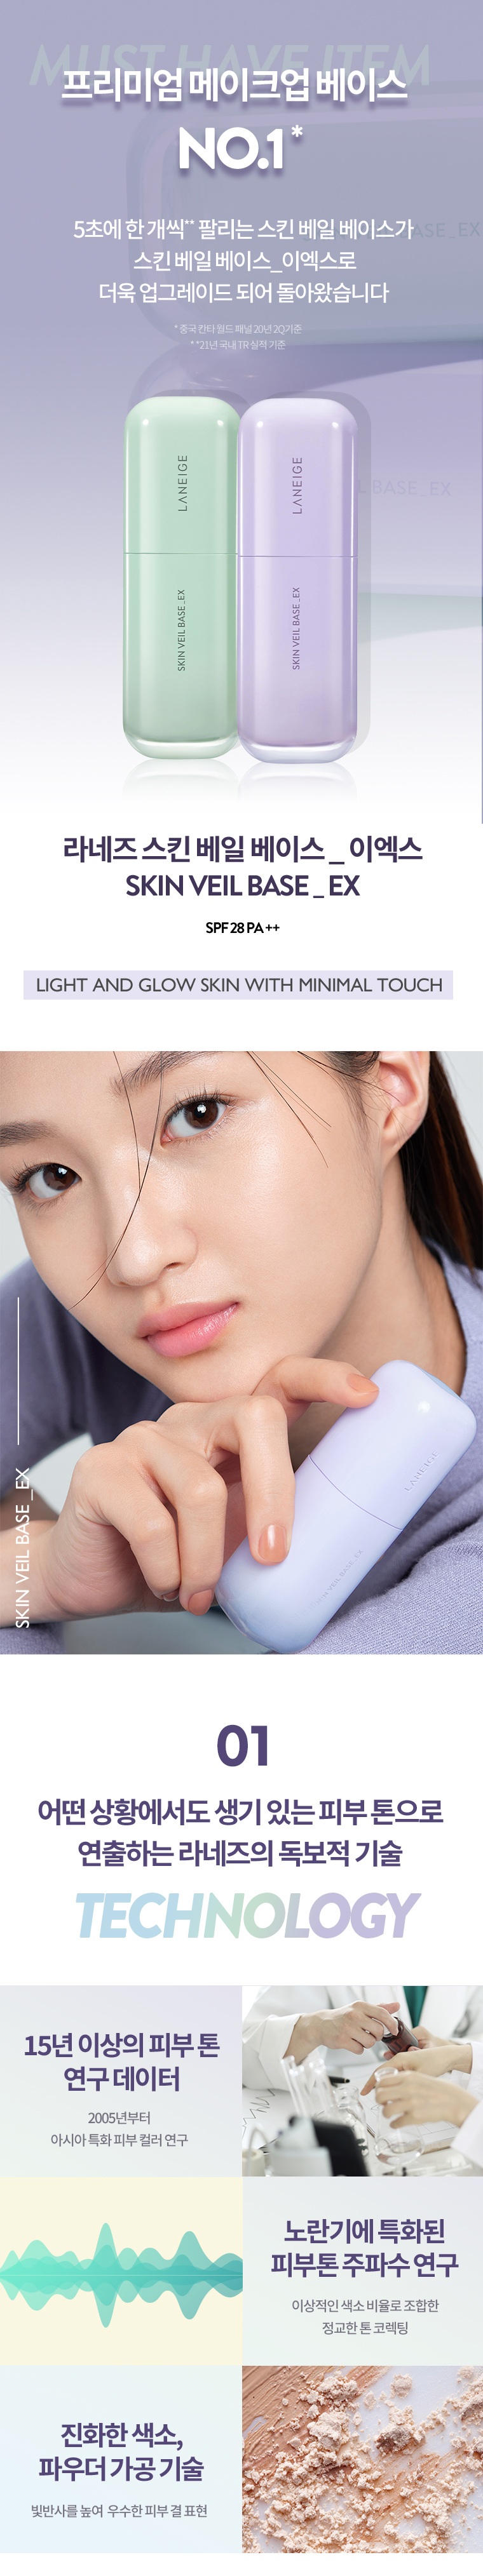 Laneige Skin Veil Base korean skincare product online shop malaysia China Singapore1